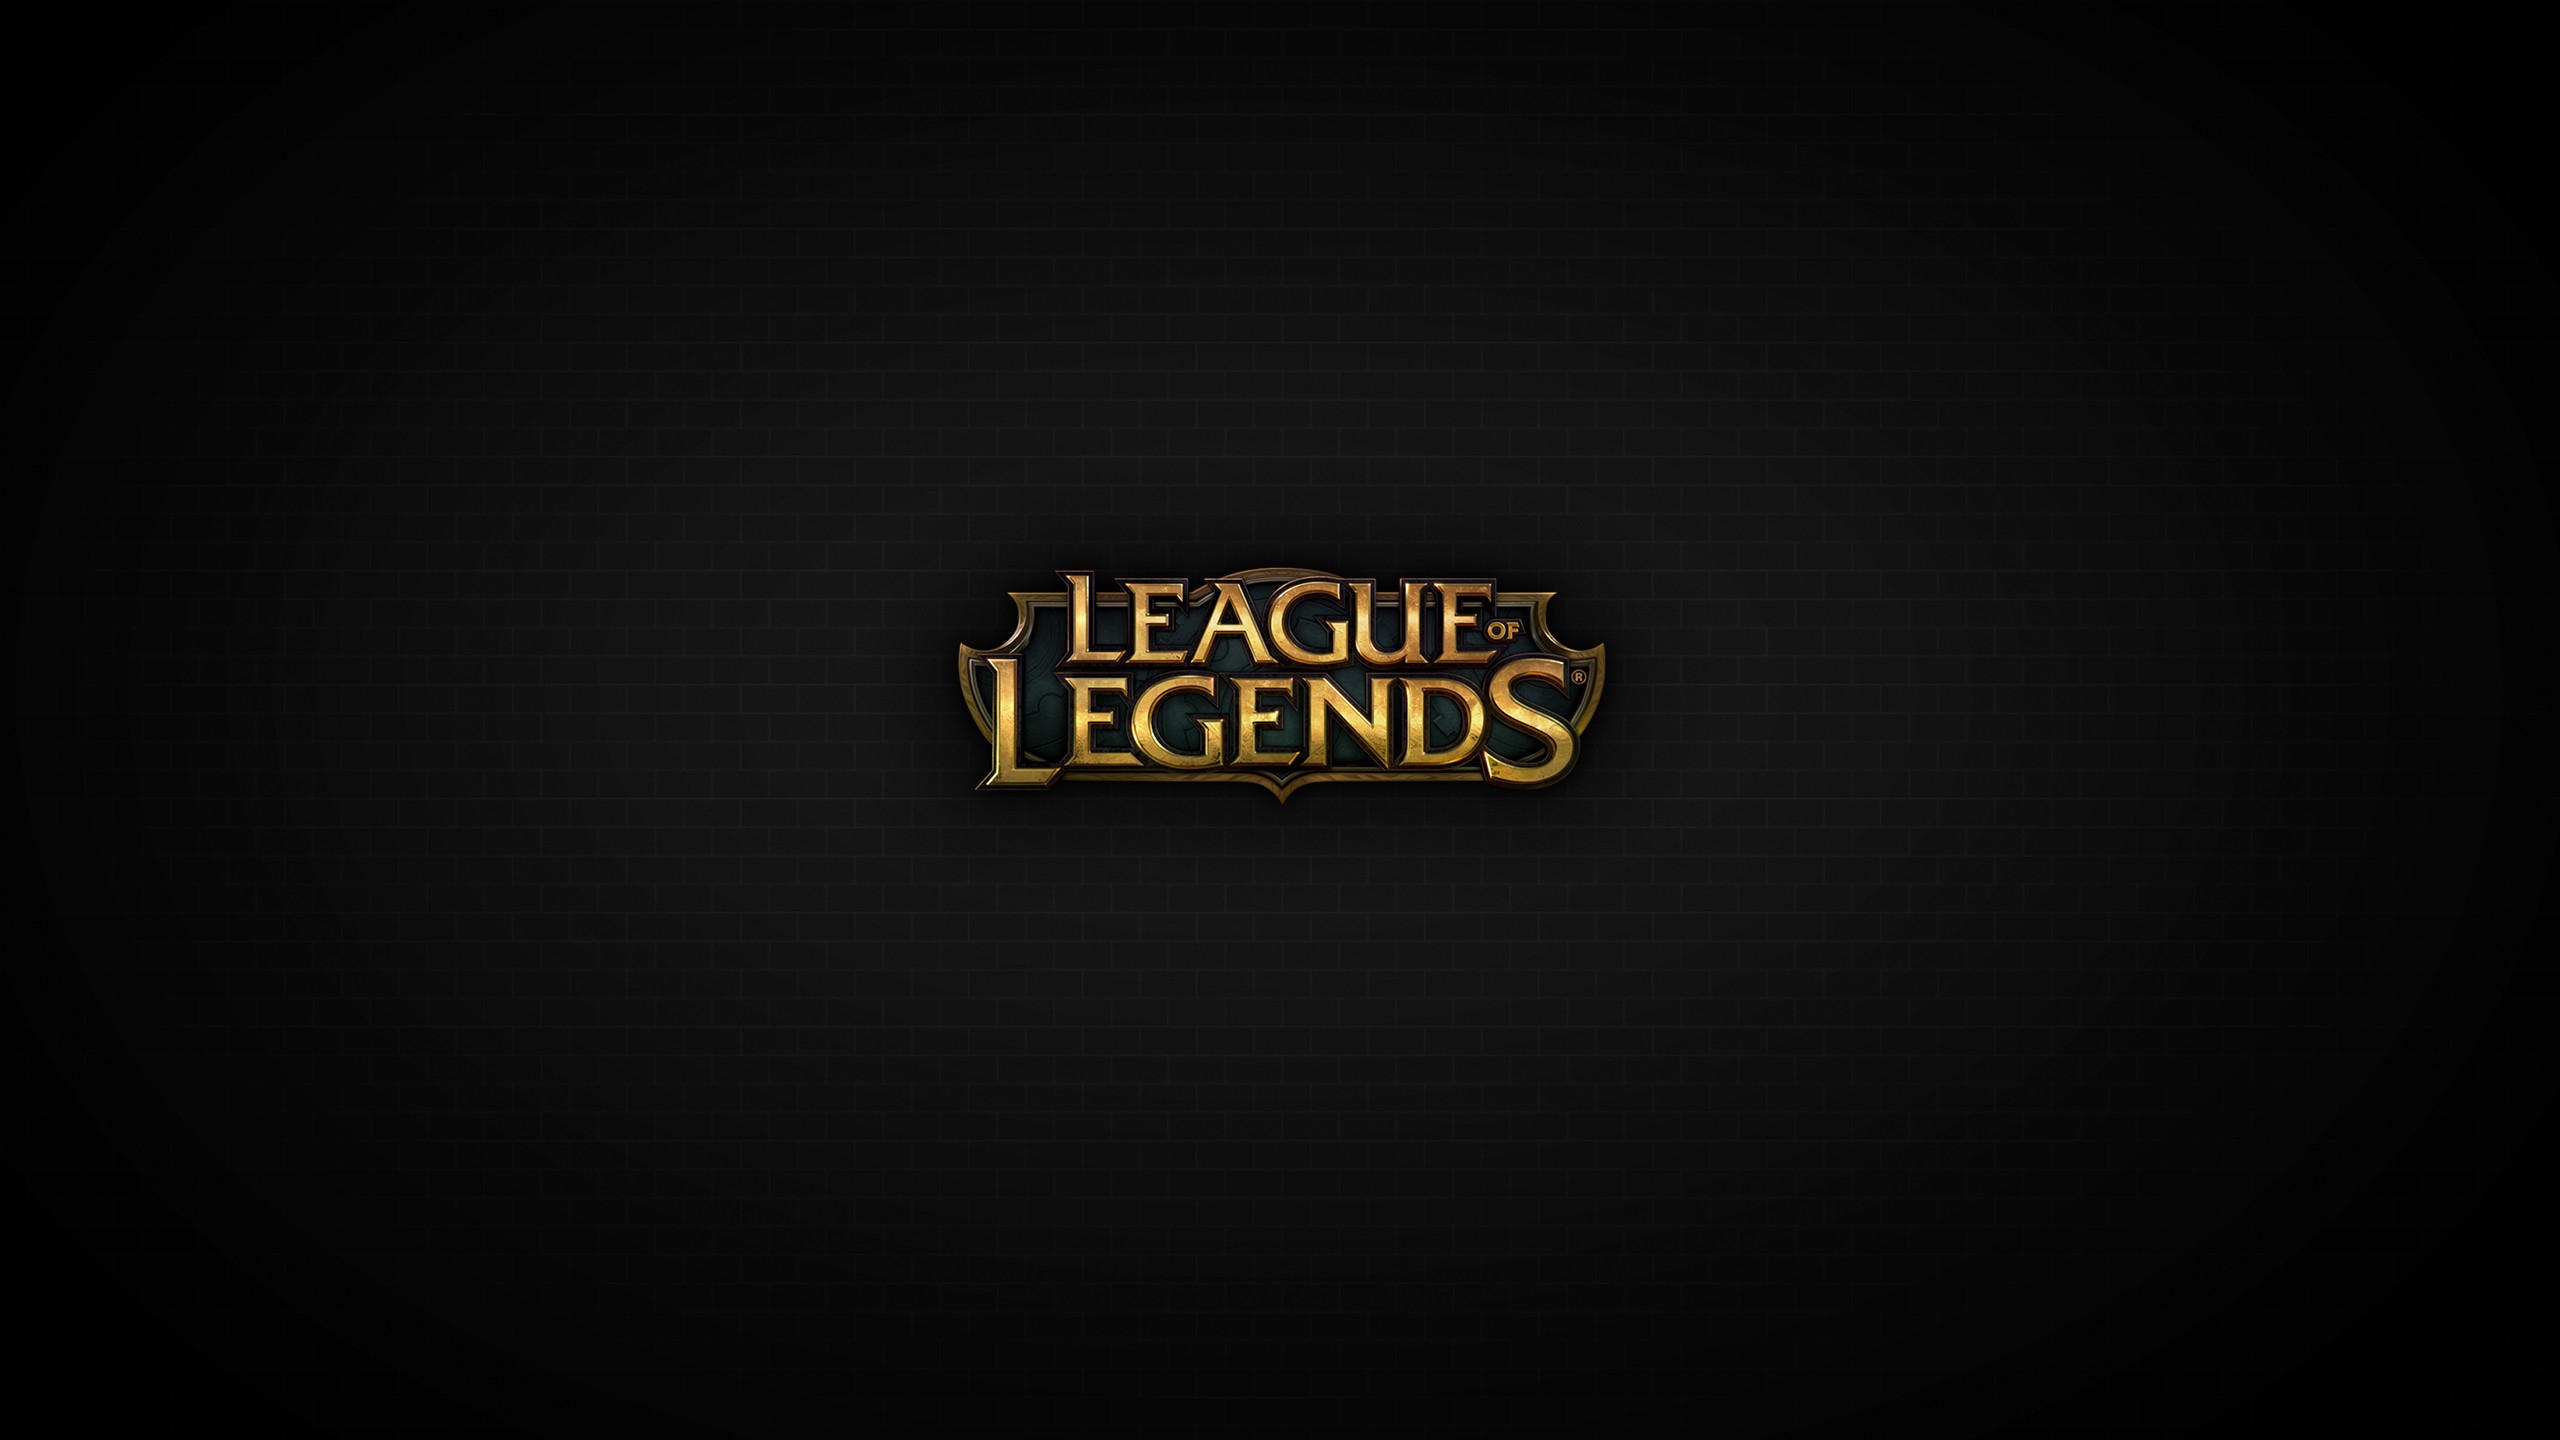 General 2560x1440 Summoner's Rift League of Legends minimalism video games